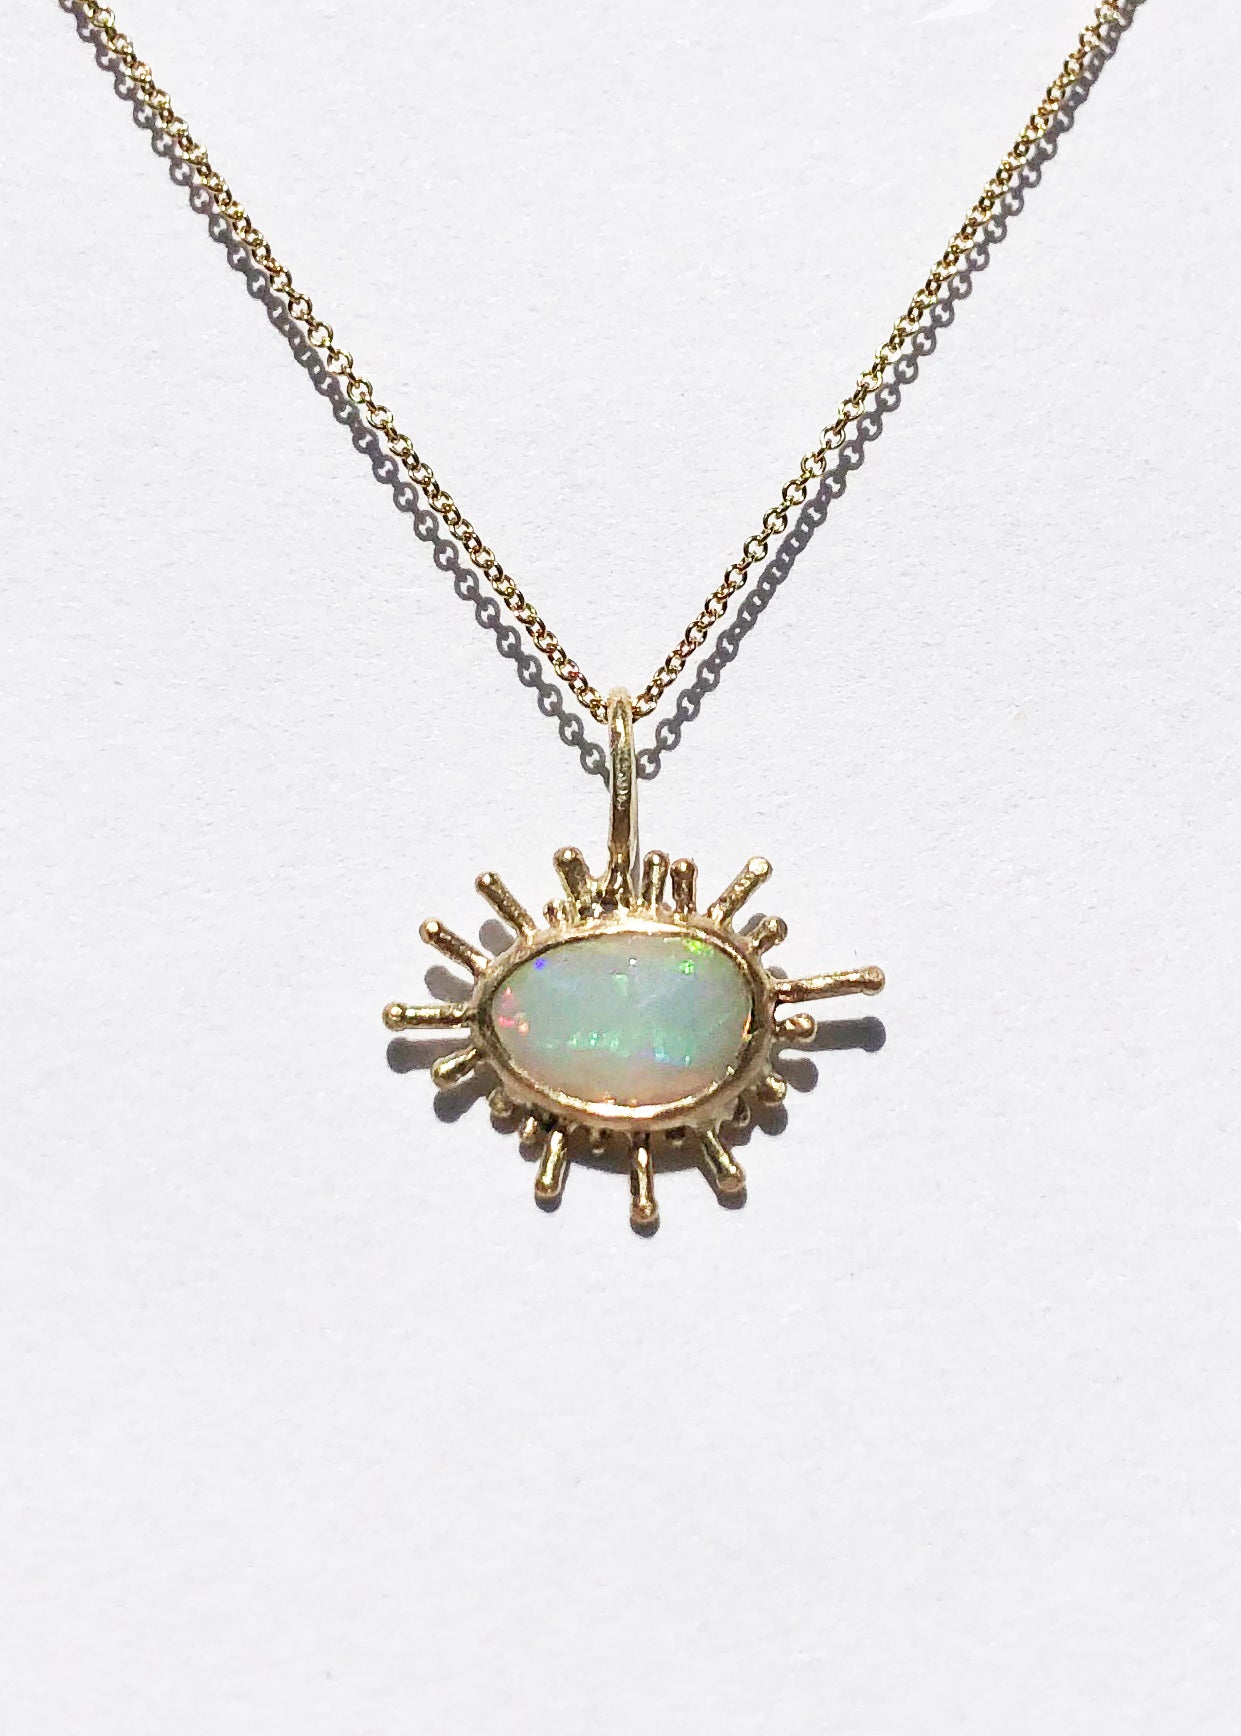 Fairmined gold pendant with opal / SUNBURST